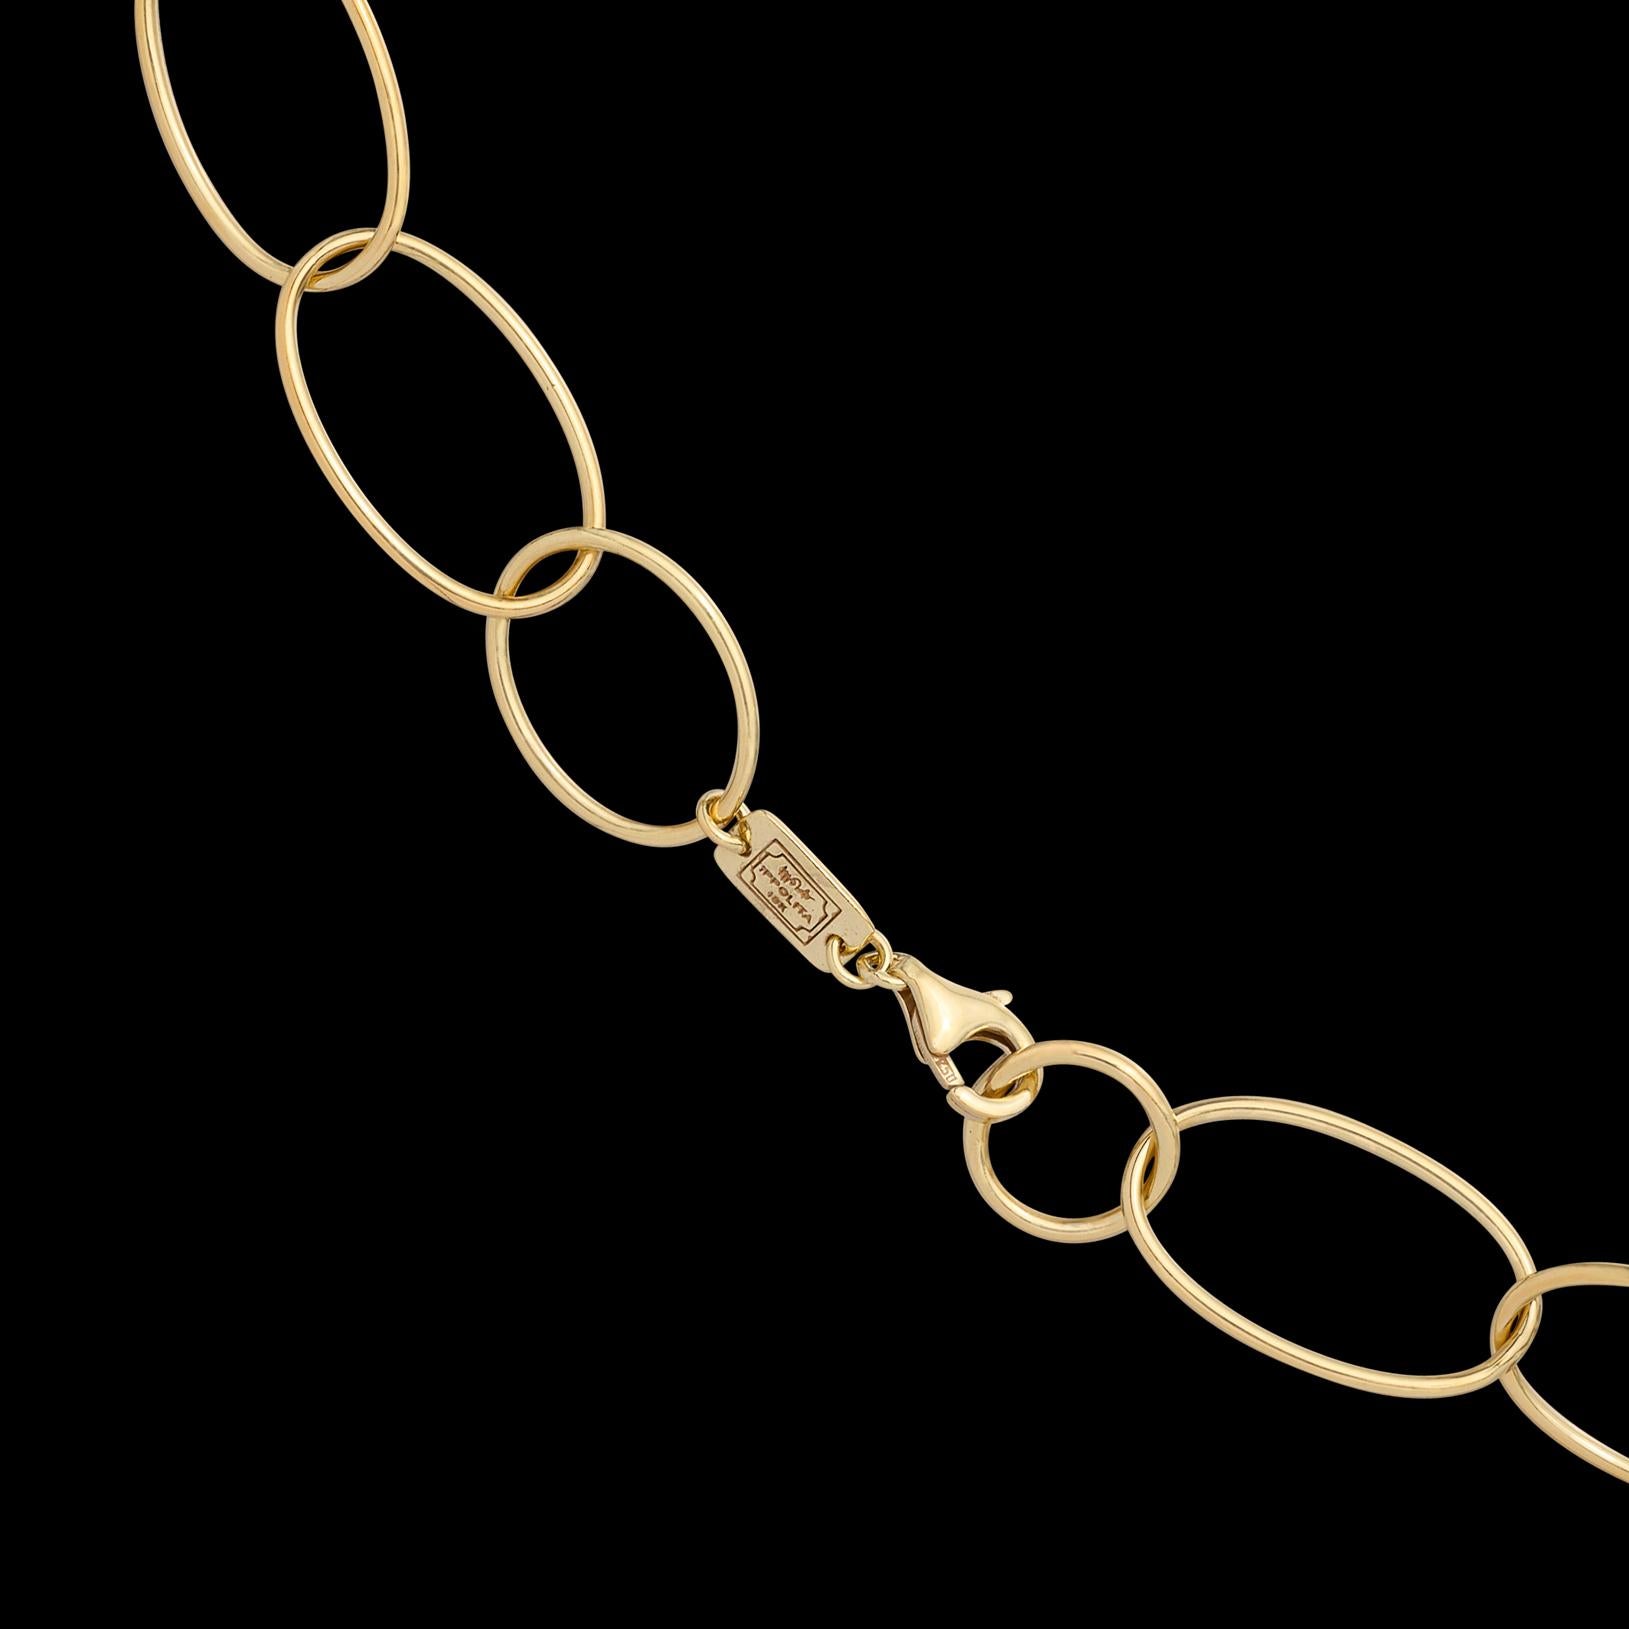 Ippolita Classico Chain Necklace in 18K Gold For Sale 2